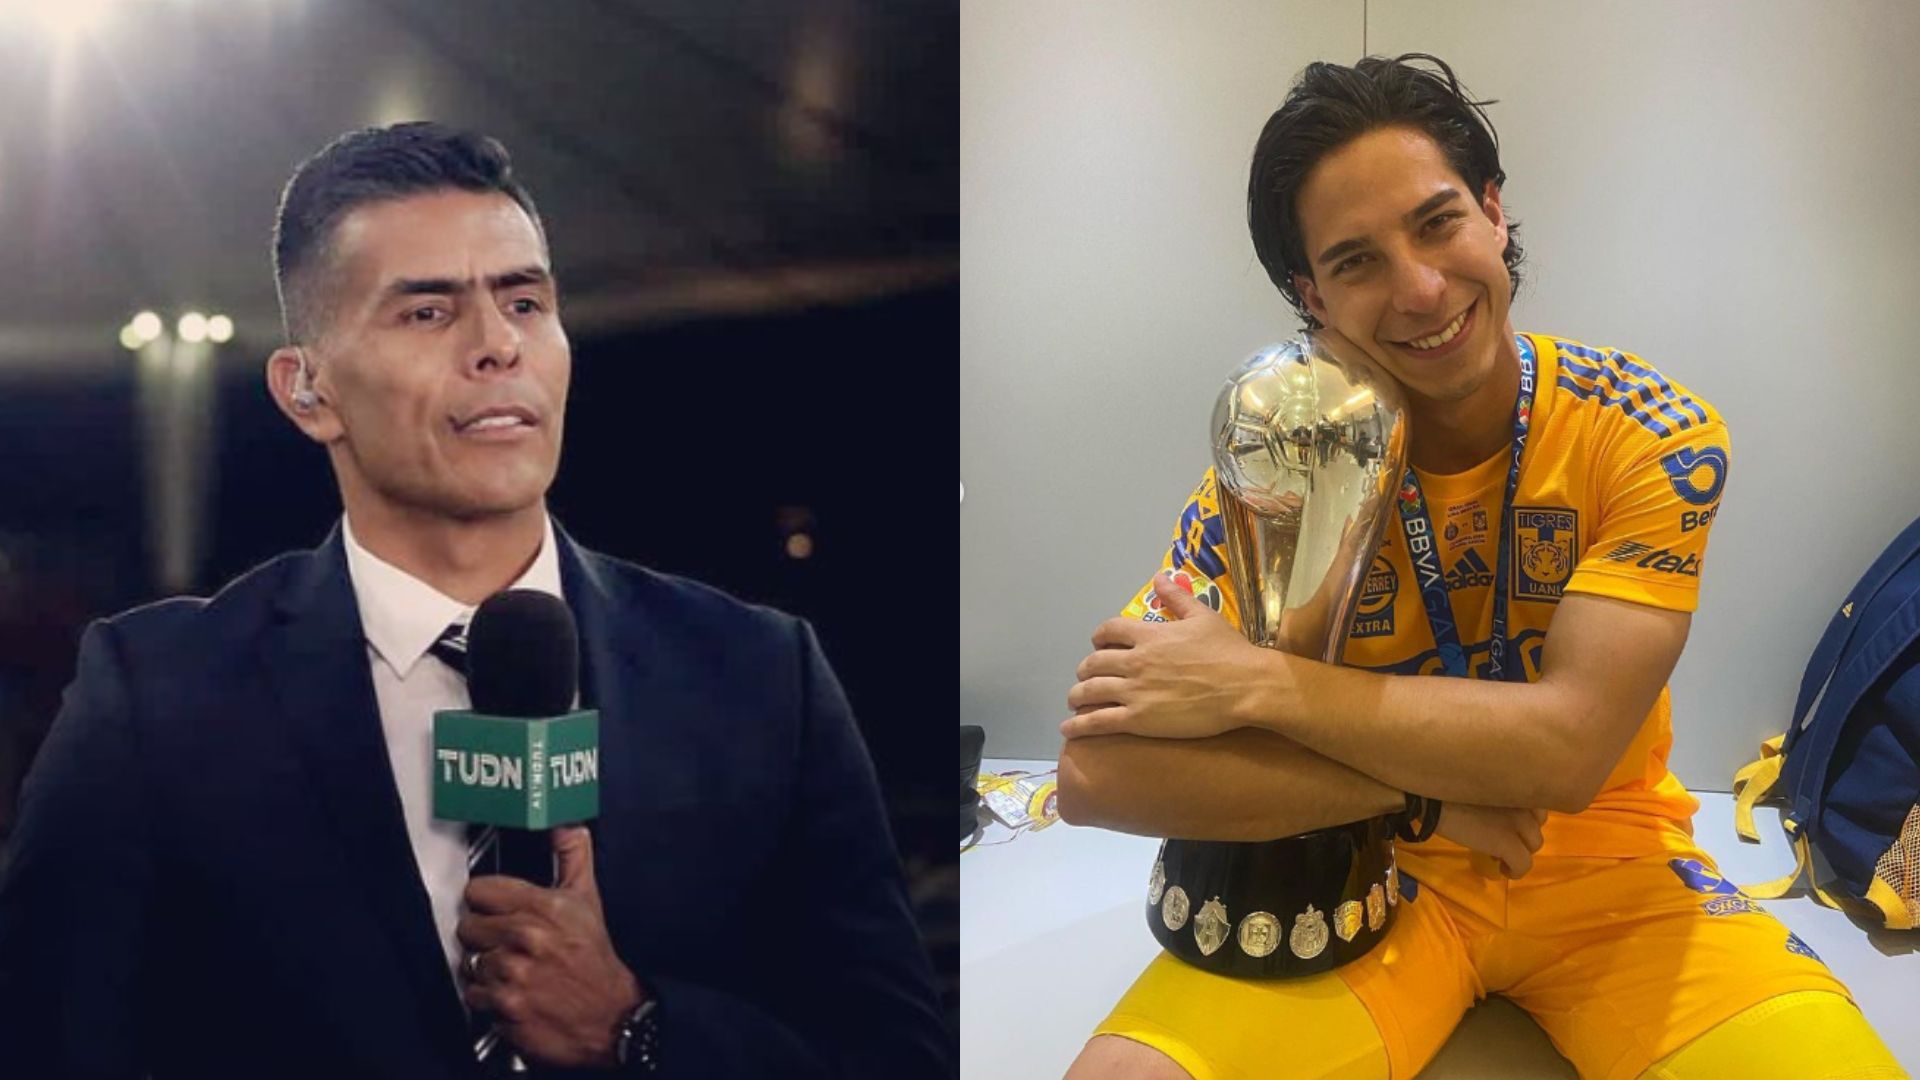 Oswaldo Sánchez rompió el silencio después de la polémica entrevista a Diego Lainez (Instagram @sanoswaldotd
// @diego_lainez)